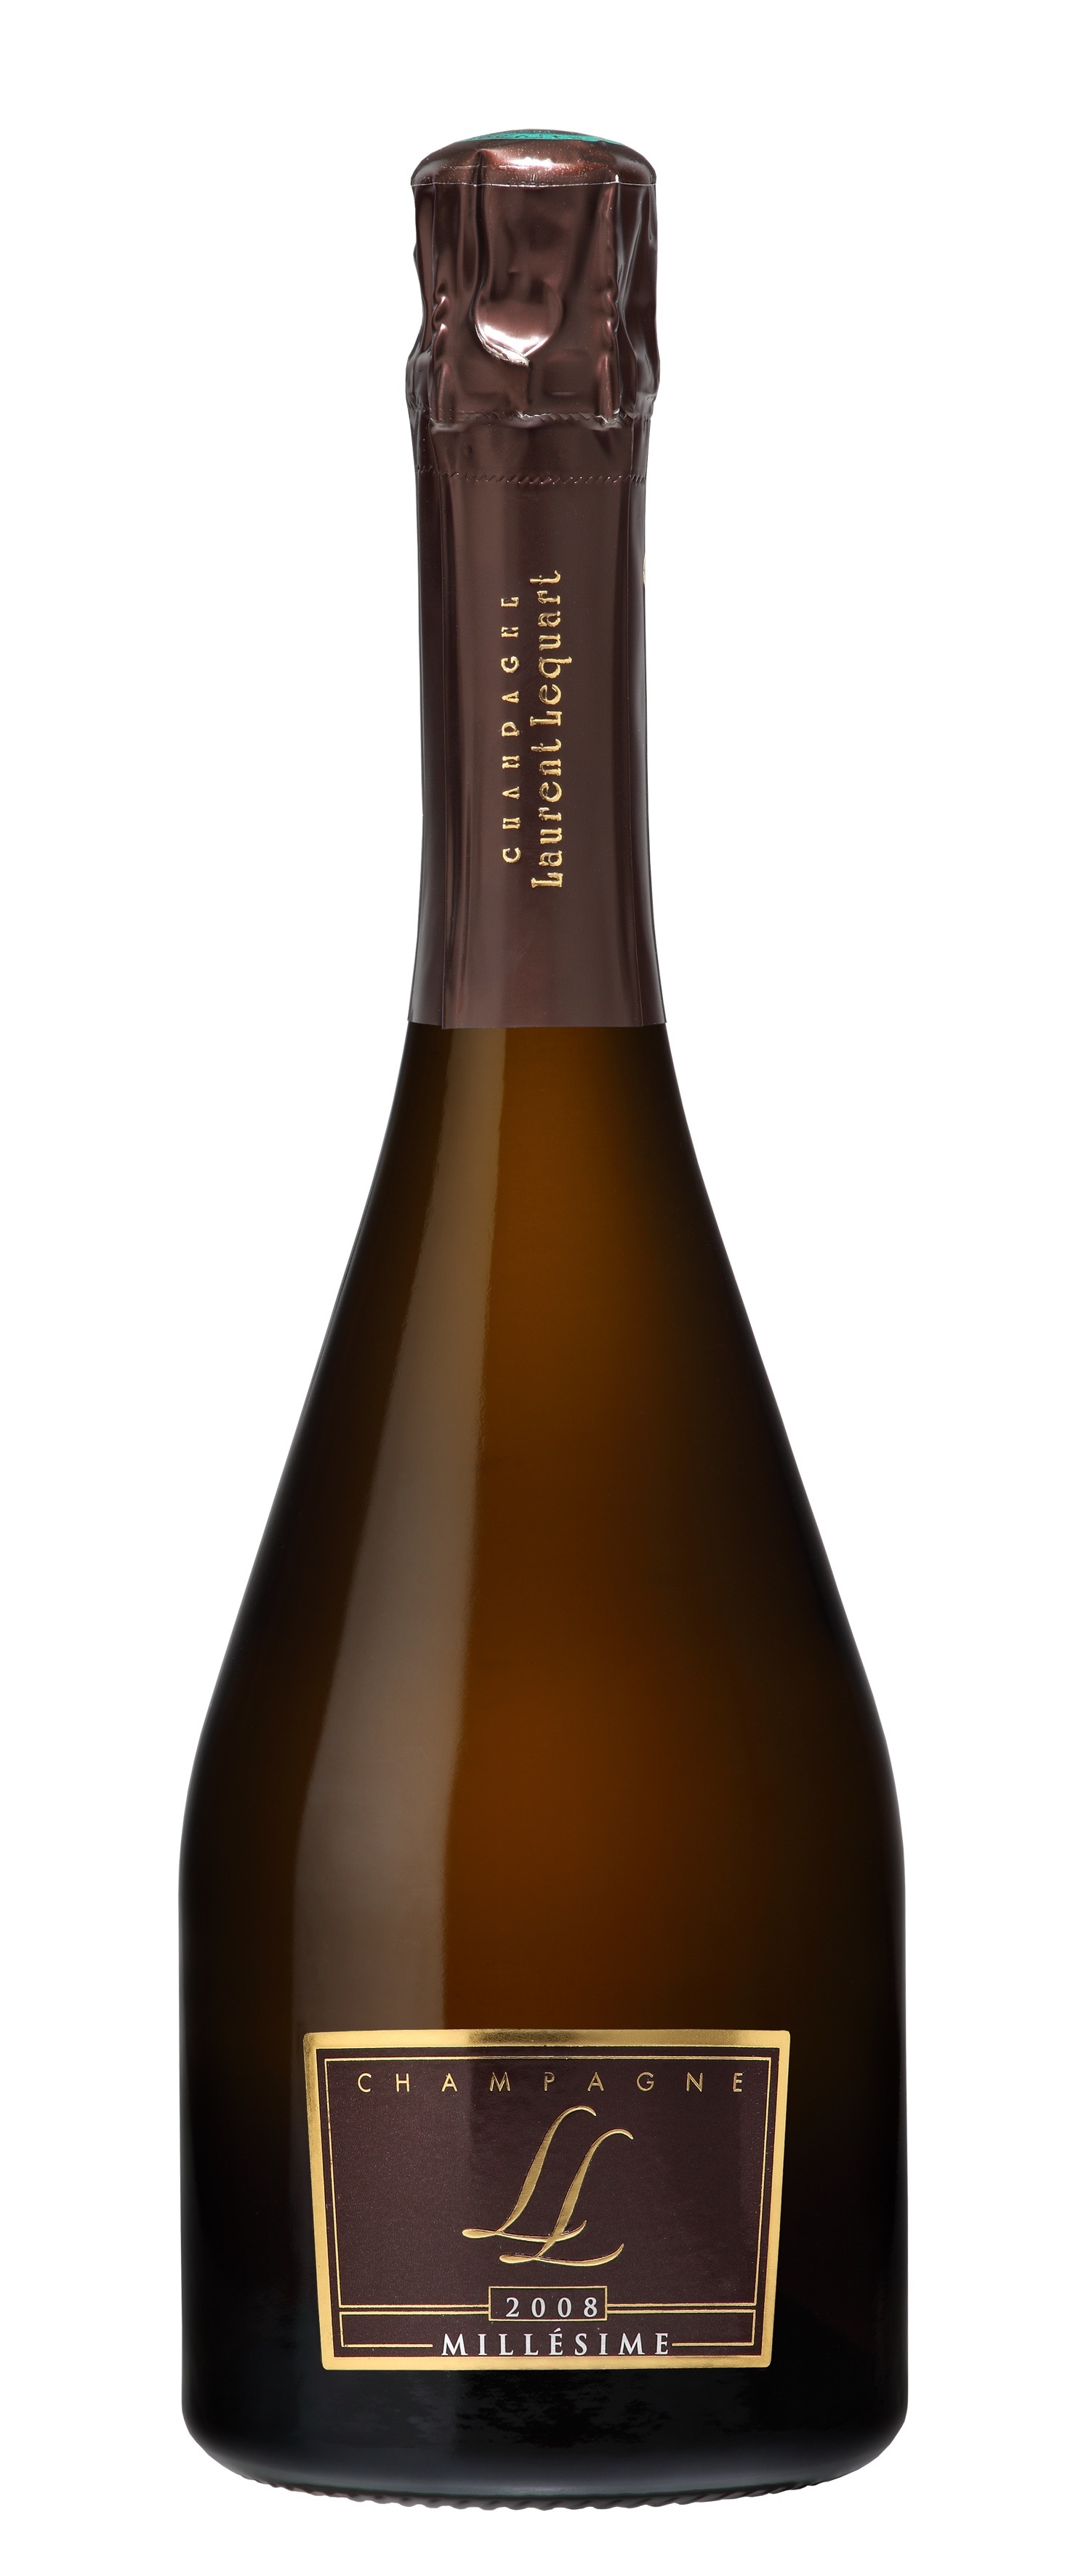 Champagne Laurent Lequart – Millésime 2008 – Brut